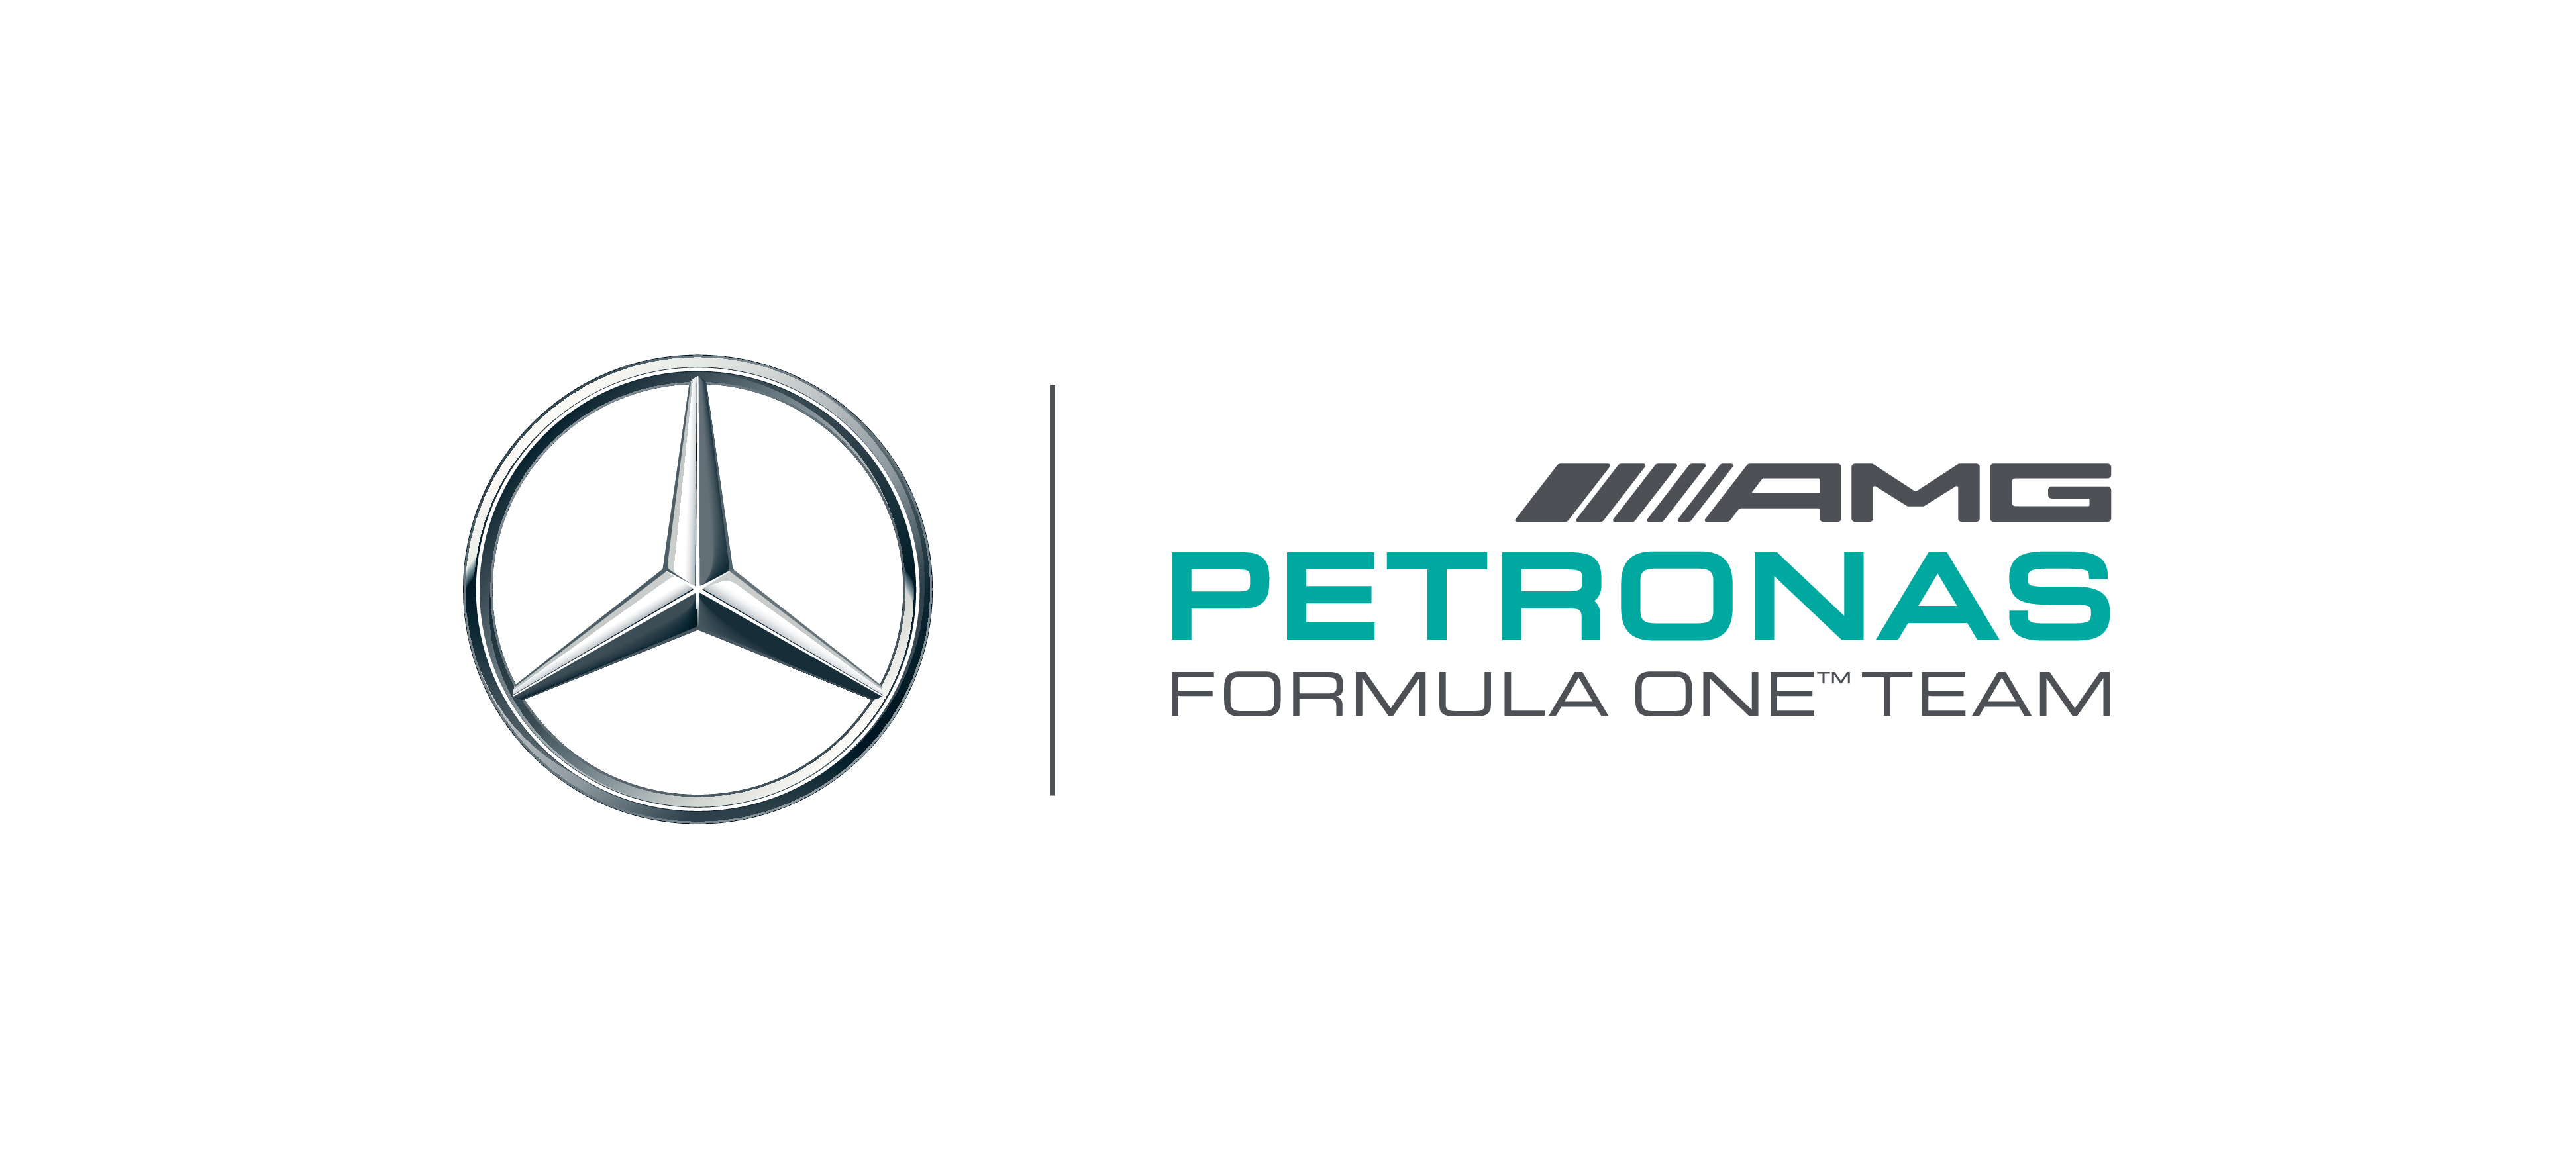 https://aeroworksproductions.com/wp-content/uploads/2018/06/Mercedes-F-1-Racing.jpg